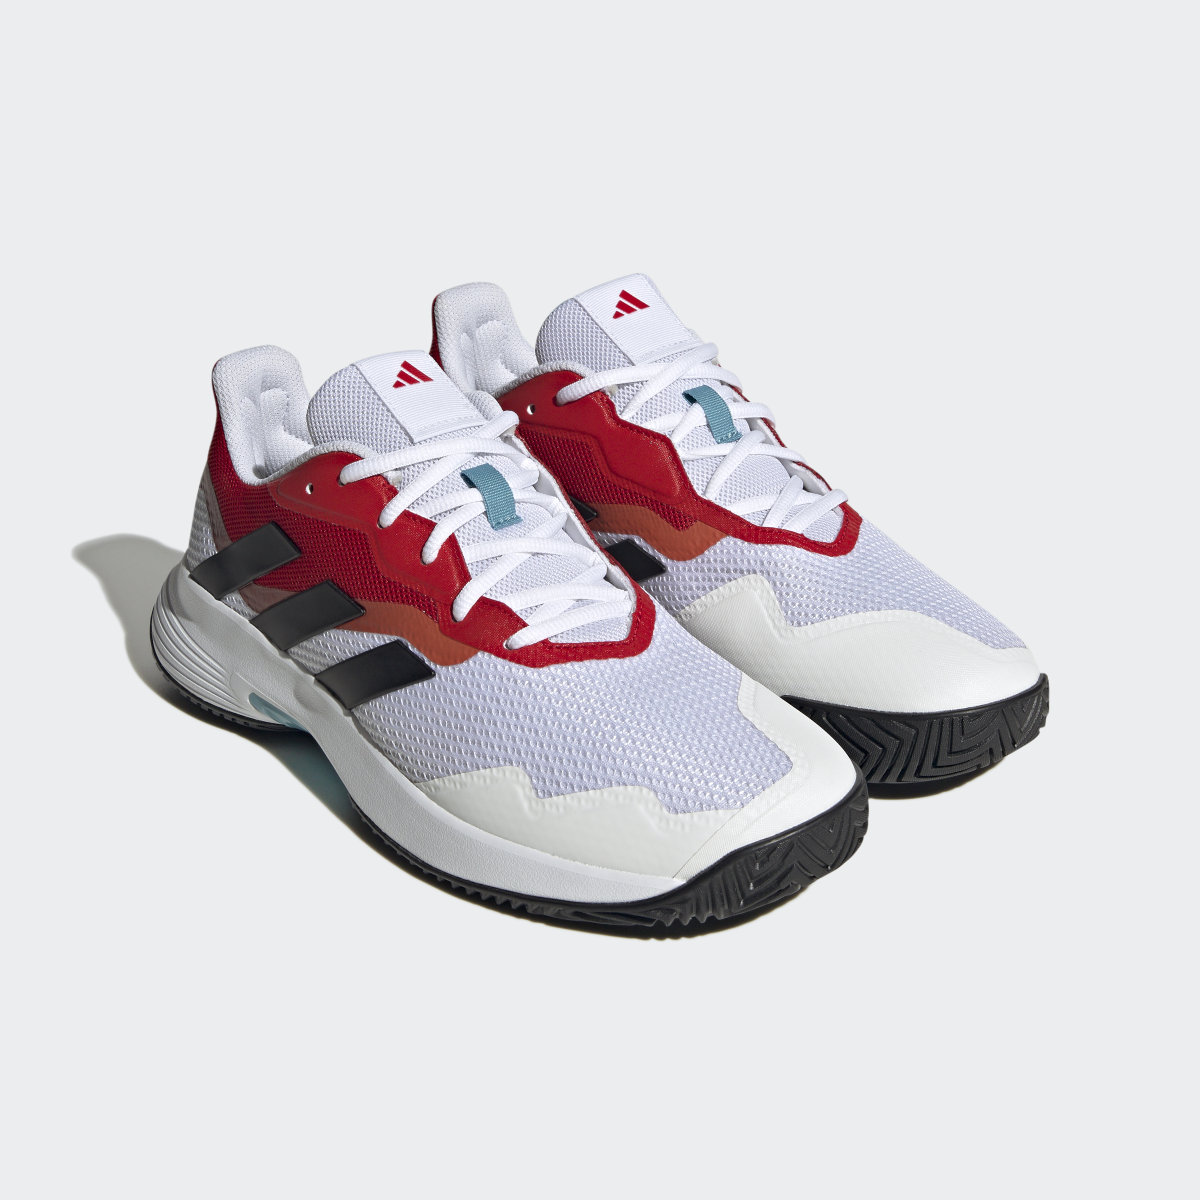 Adidas CourtJam Control Tennis Shoes. 5